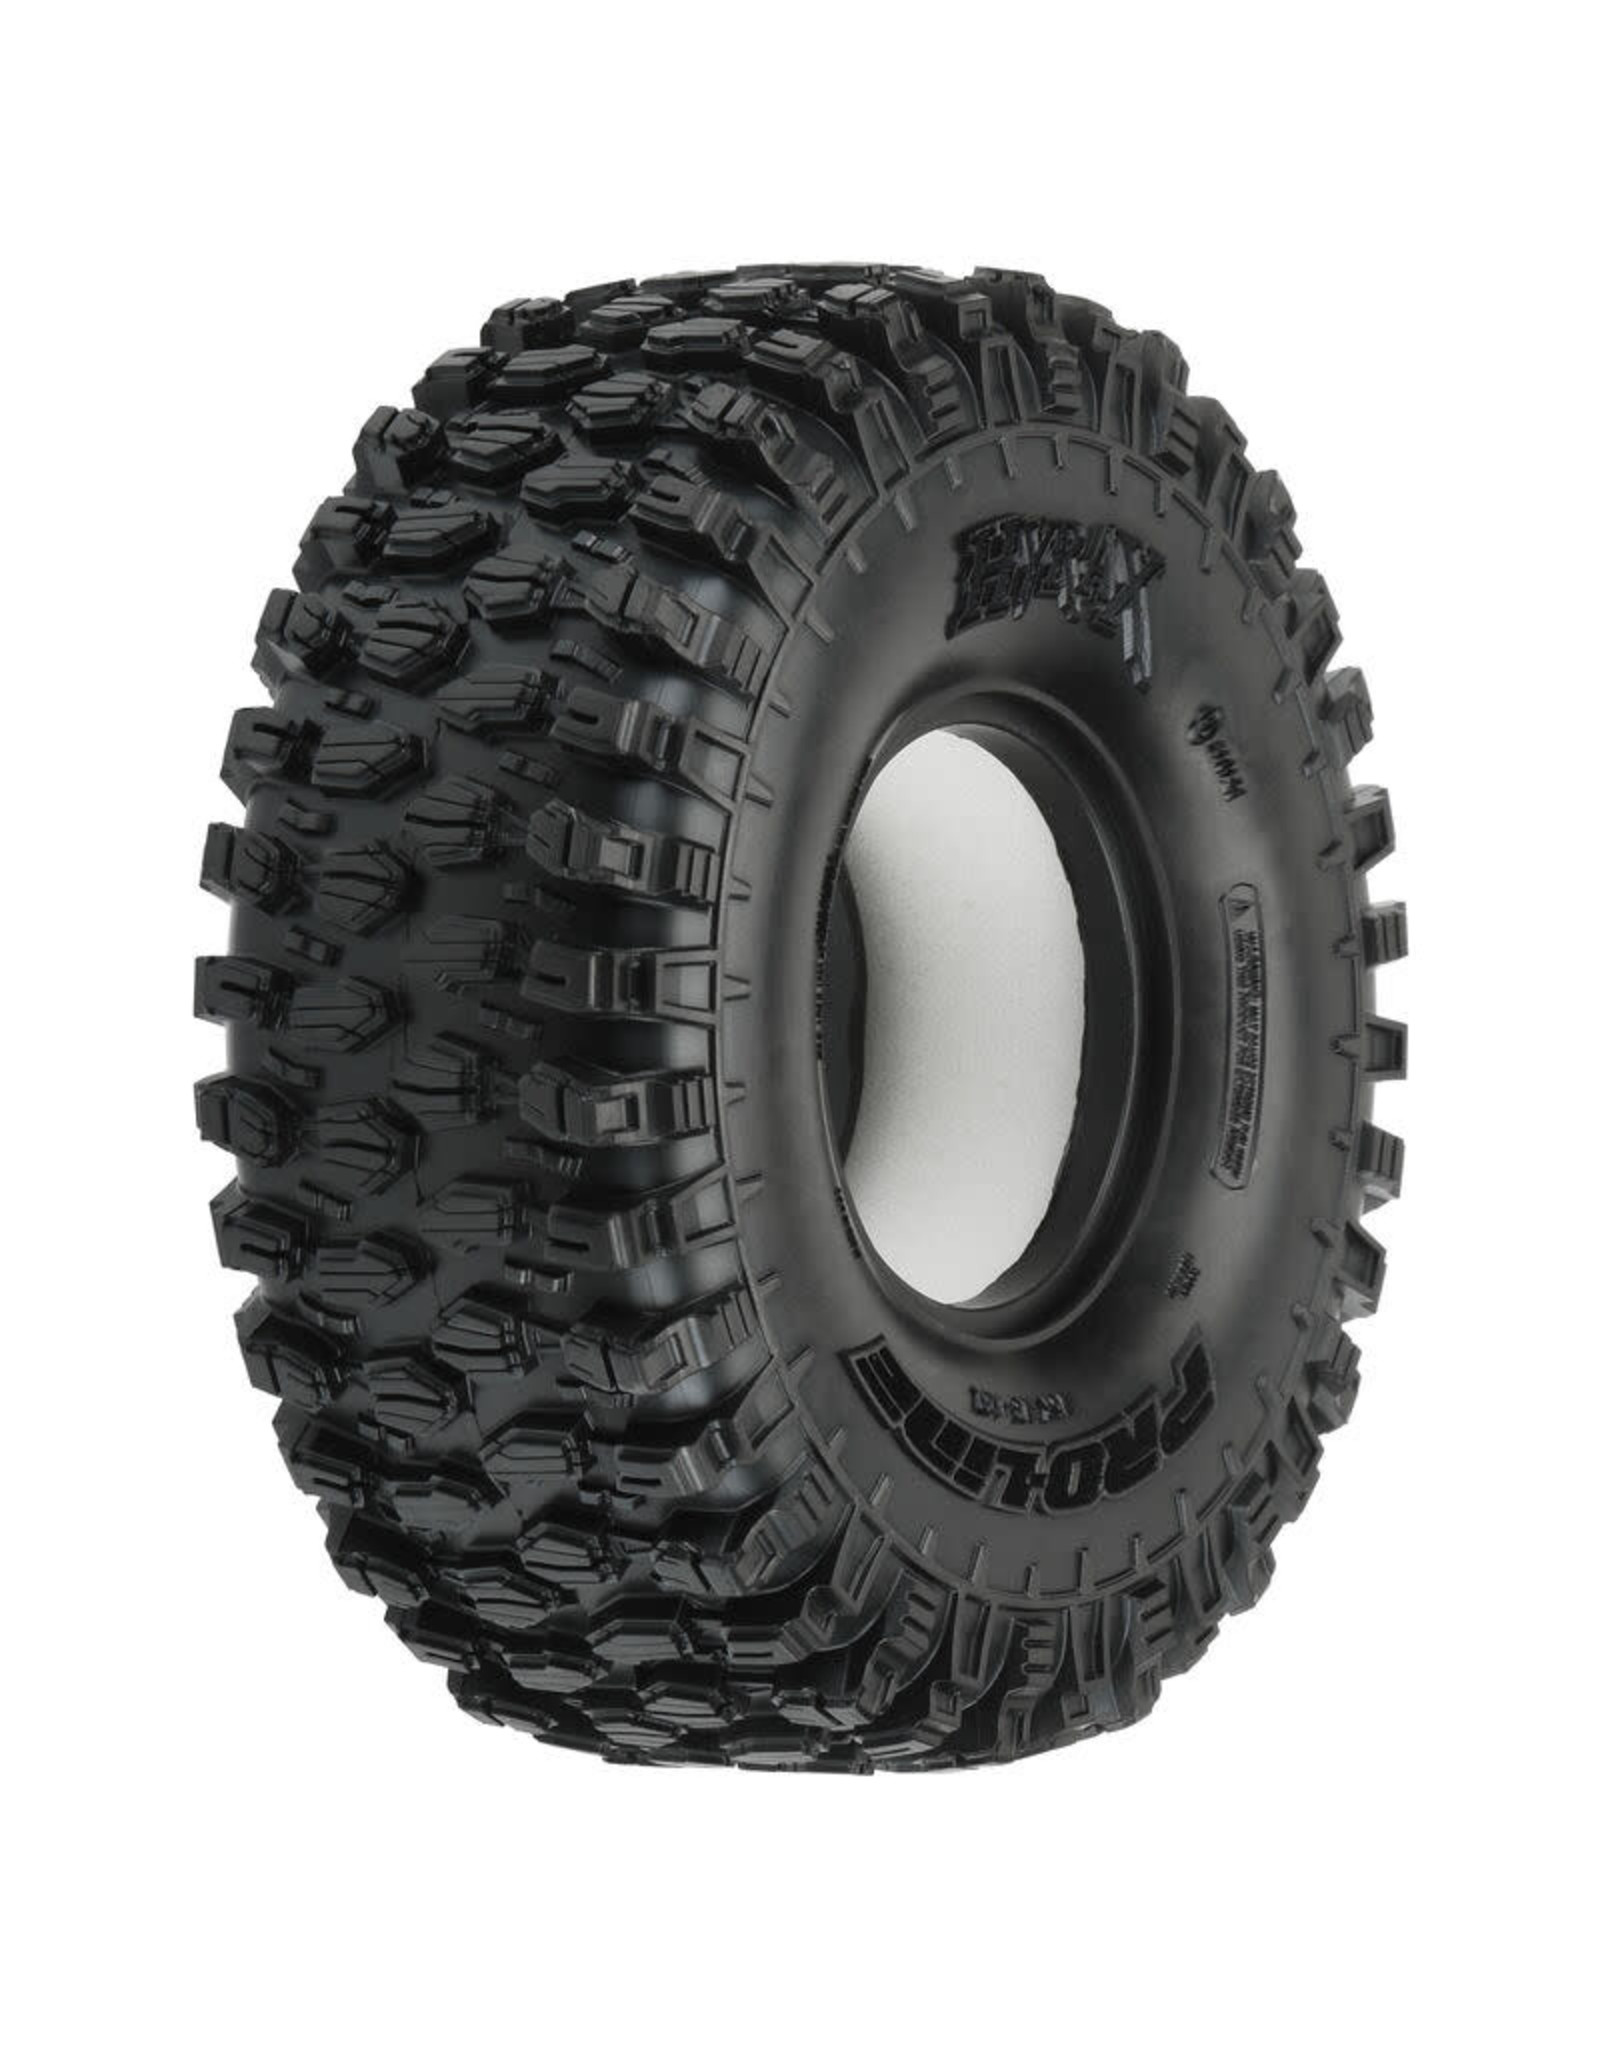 Proline Hyrax 1.9 G8 Rock Terrain Truck Tires (2) PRO1012814